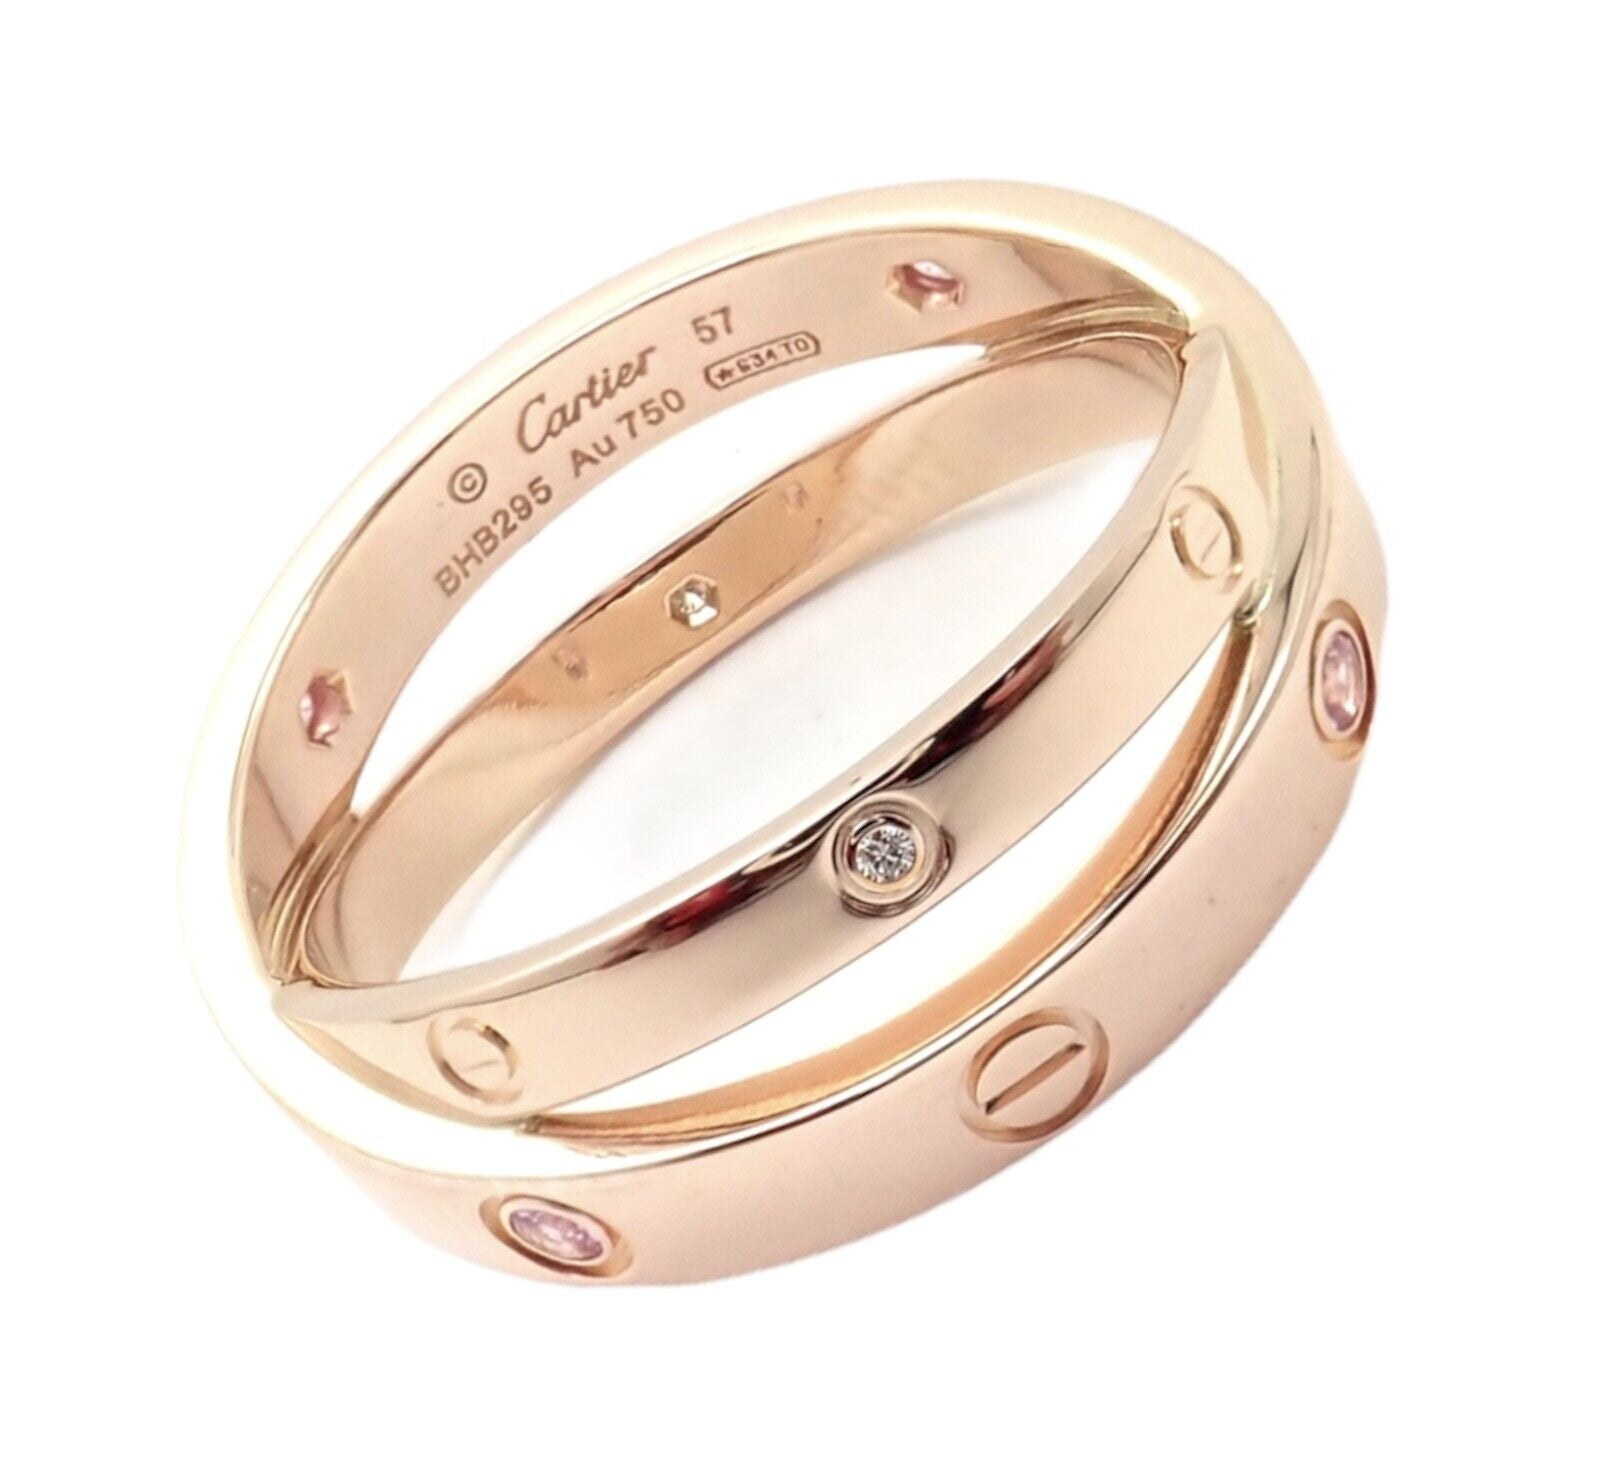 LOVE# bracelet, small model, 6 diamonds